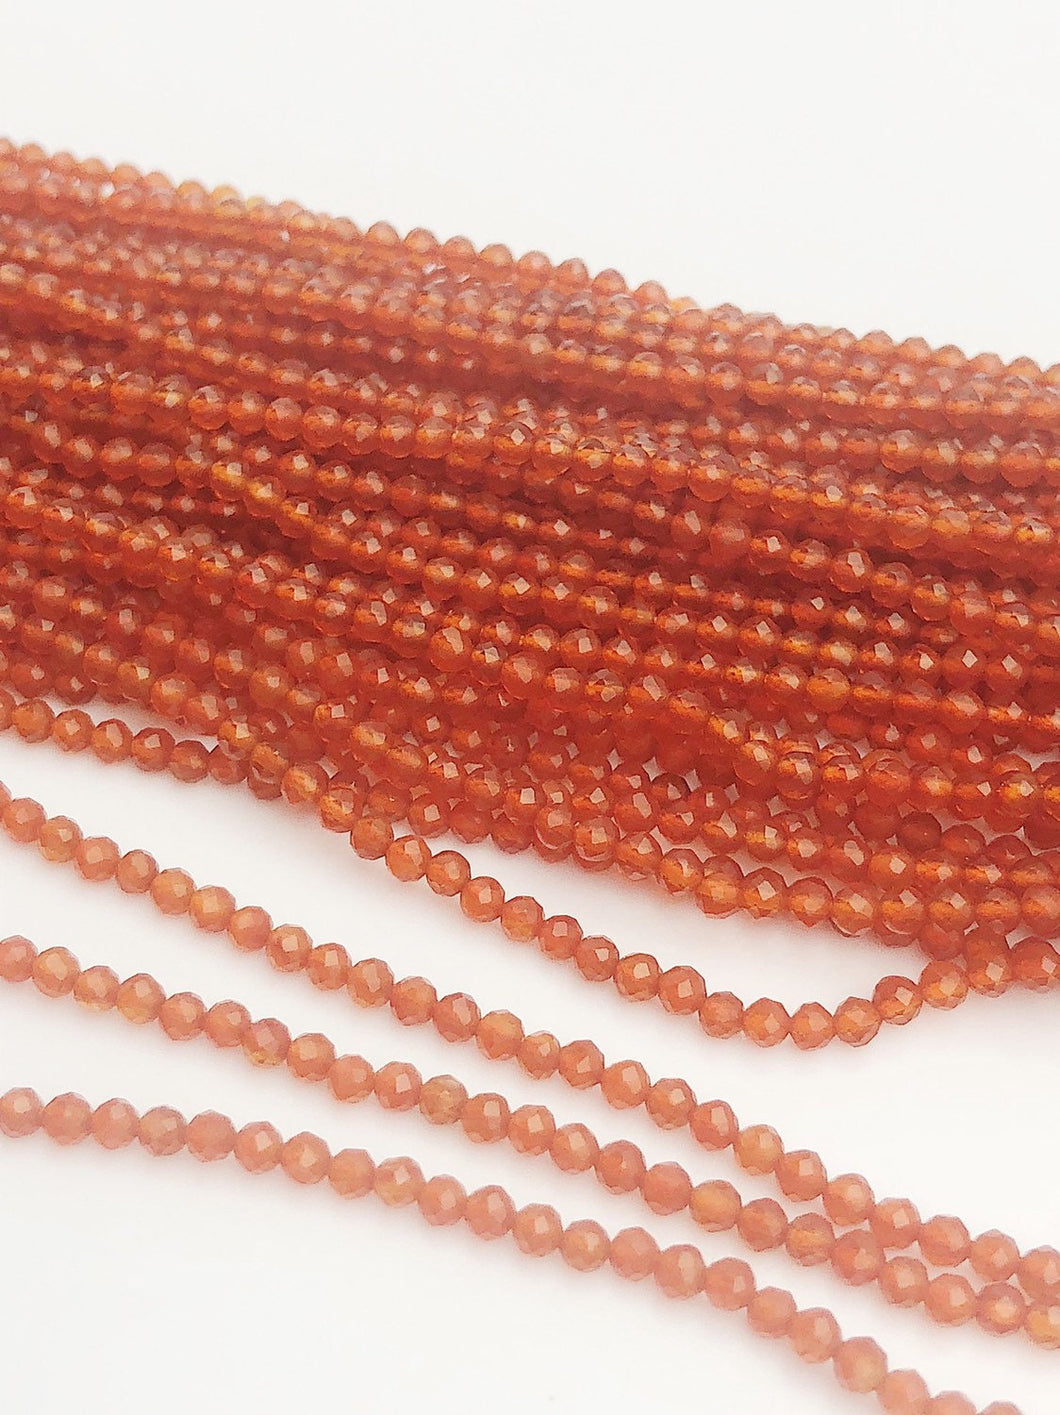 HALF OFF SALE - Coraline Gemstone Beads, Full Strand, Semi Precious Gemstone, 13